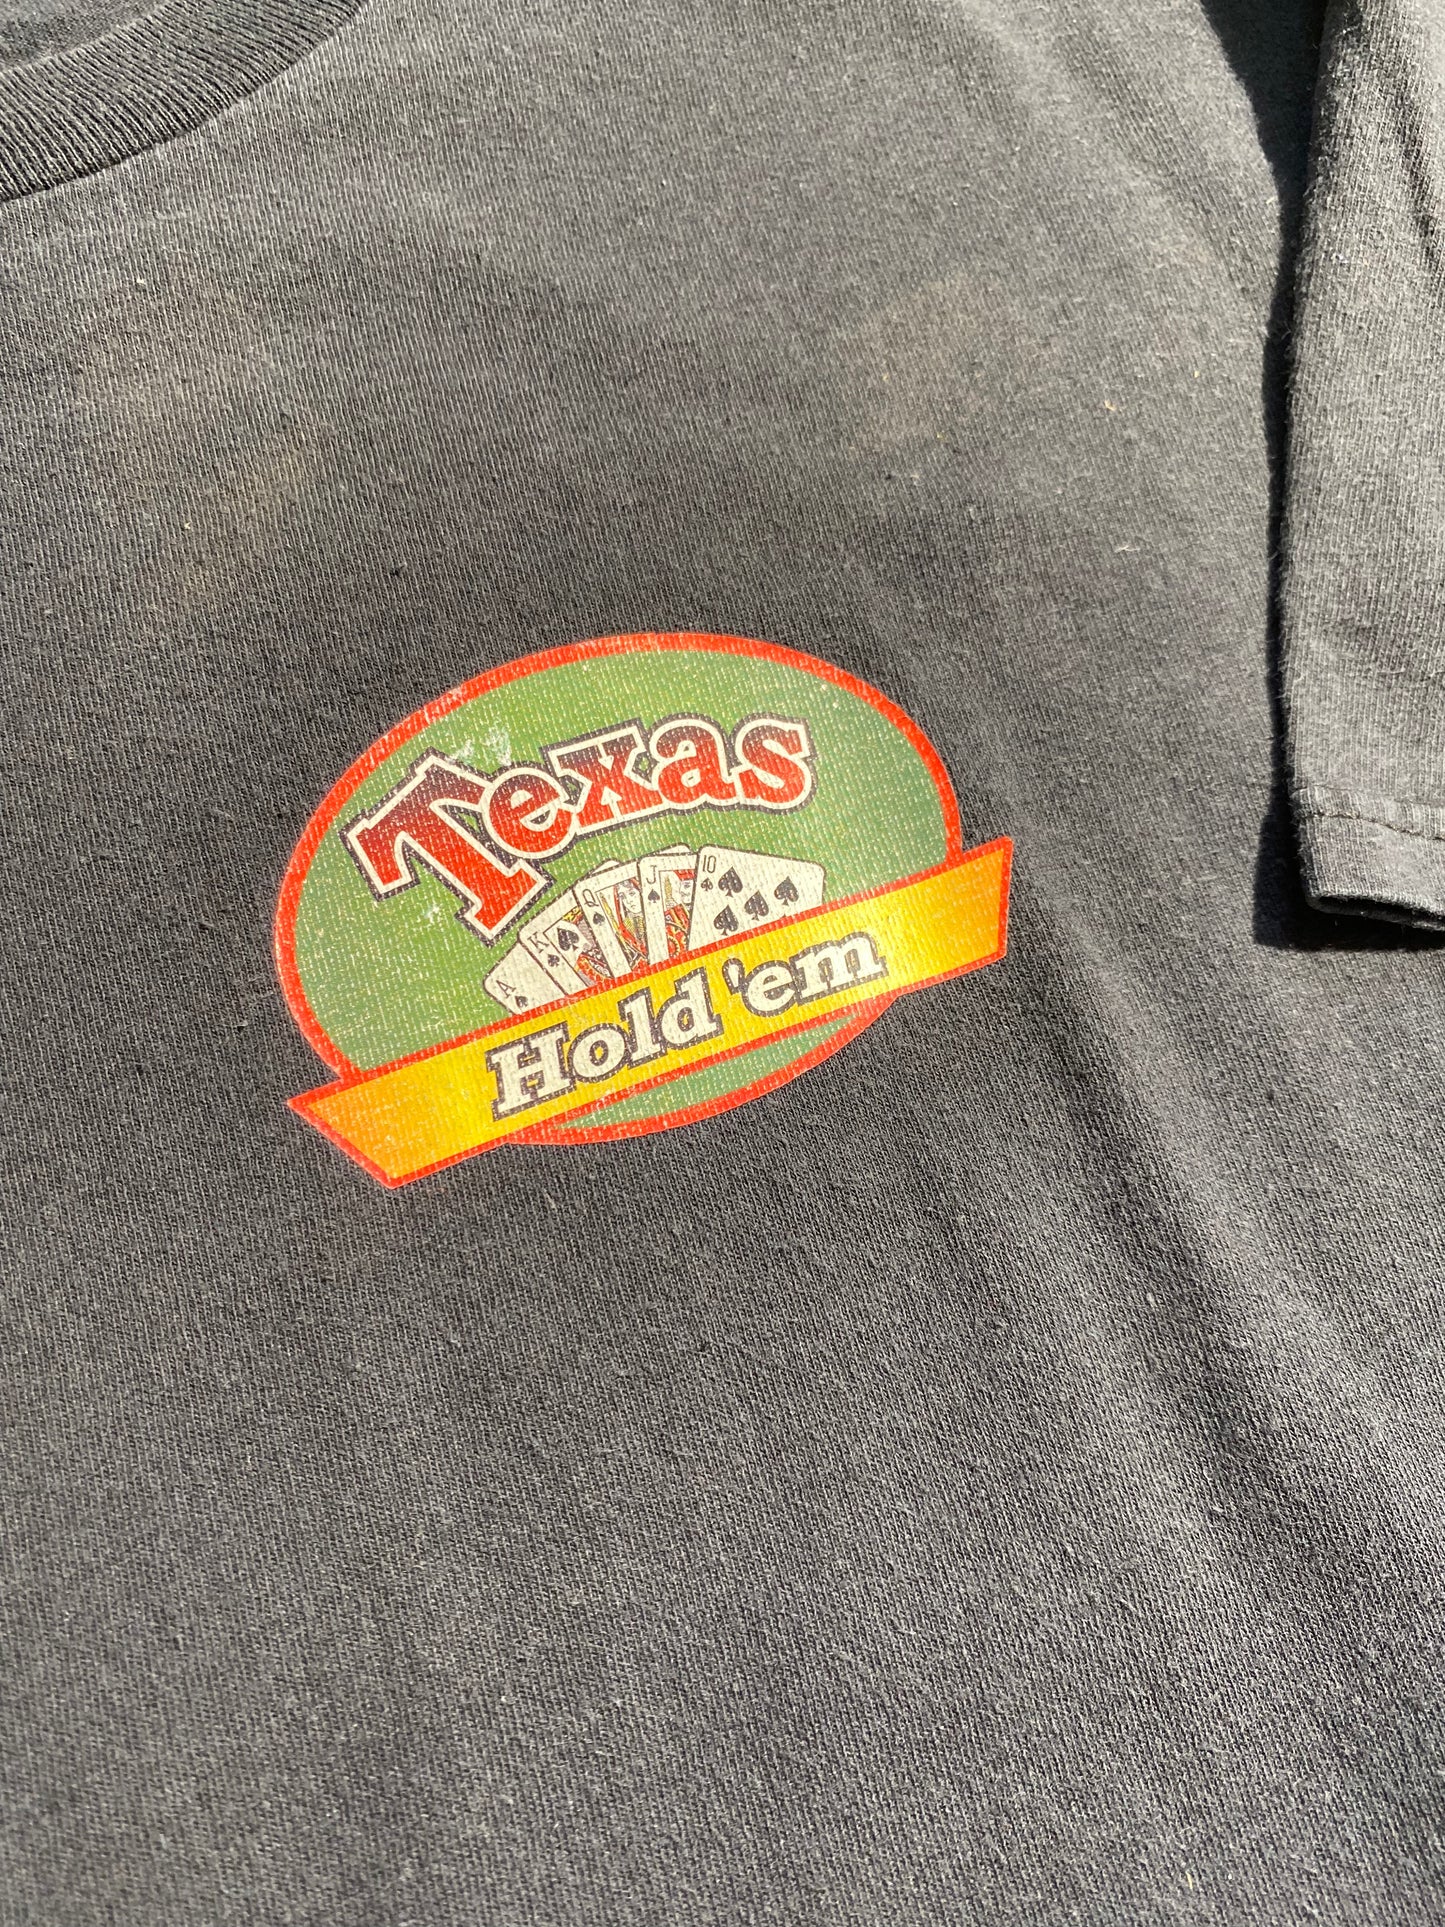 Vintage Texas hold 'em T-Shirt ♥️